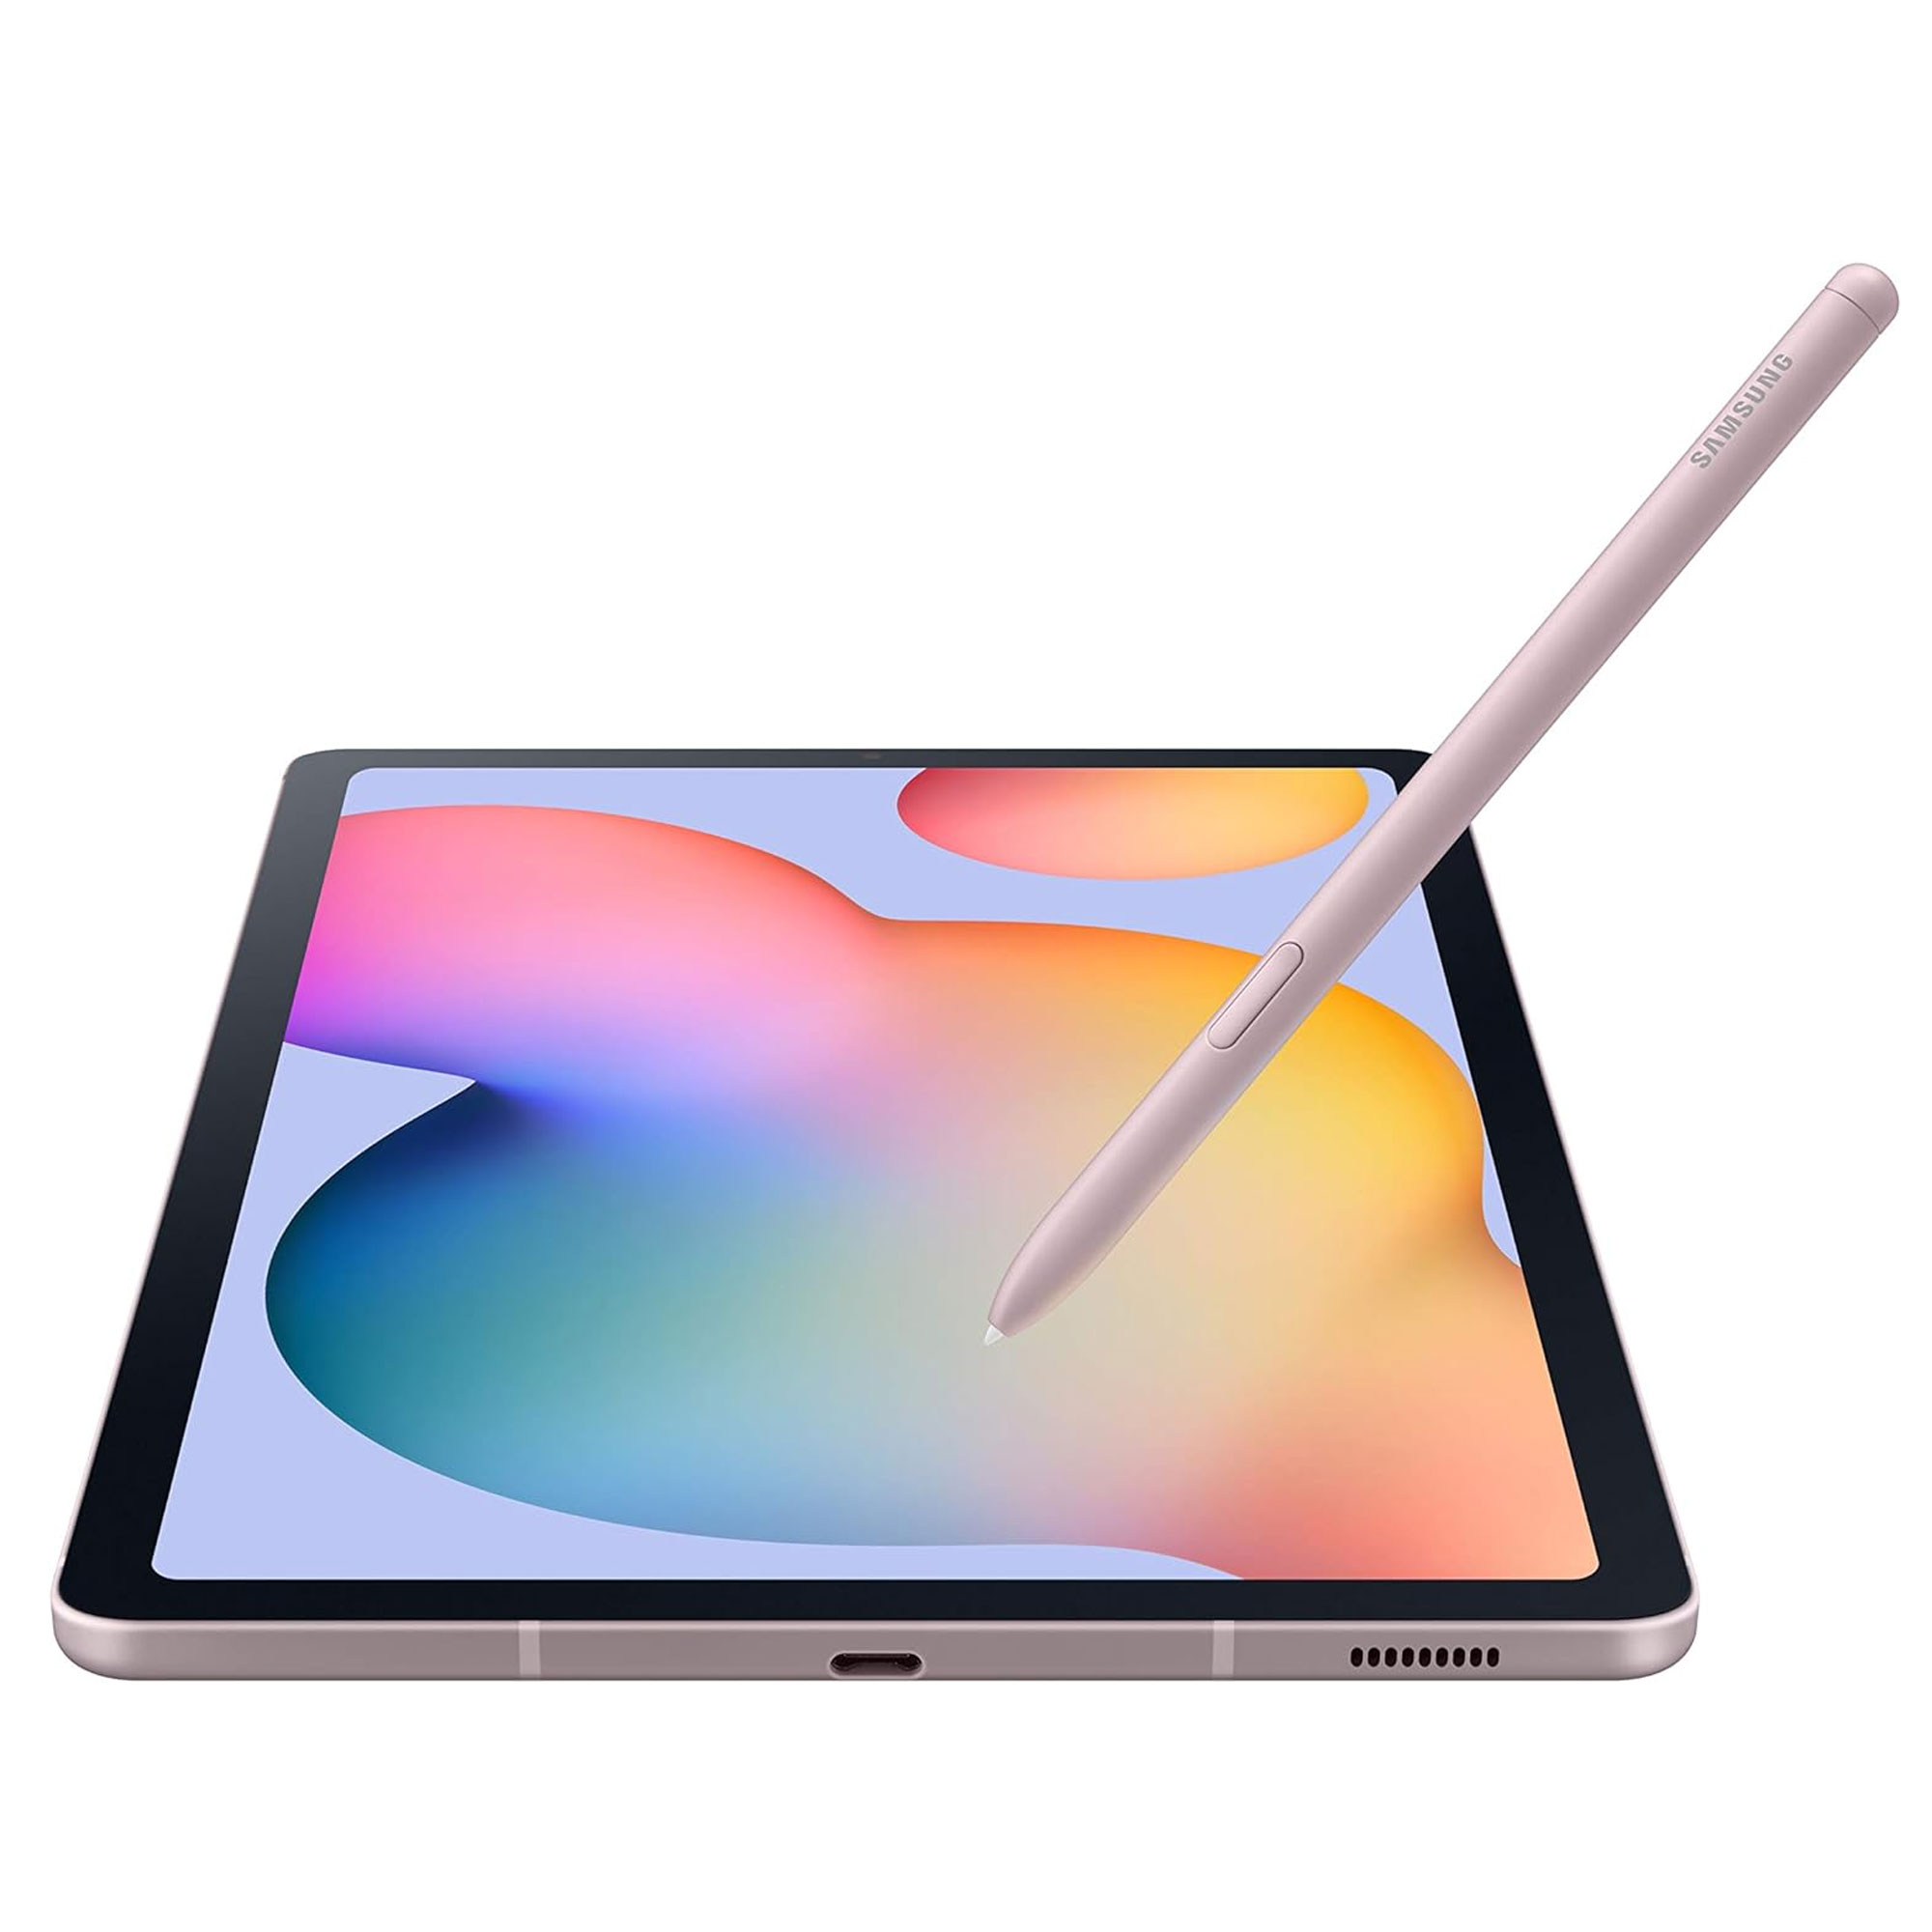 Samsung Galaxy Tab S6 Lite 10.4" Tablet (Wi-Fi, Chiffon Rose)